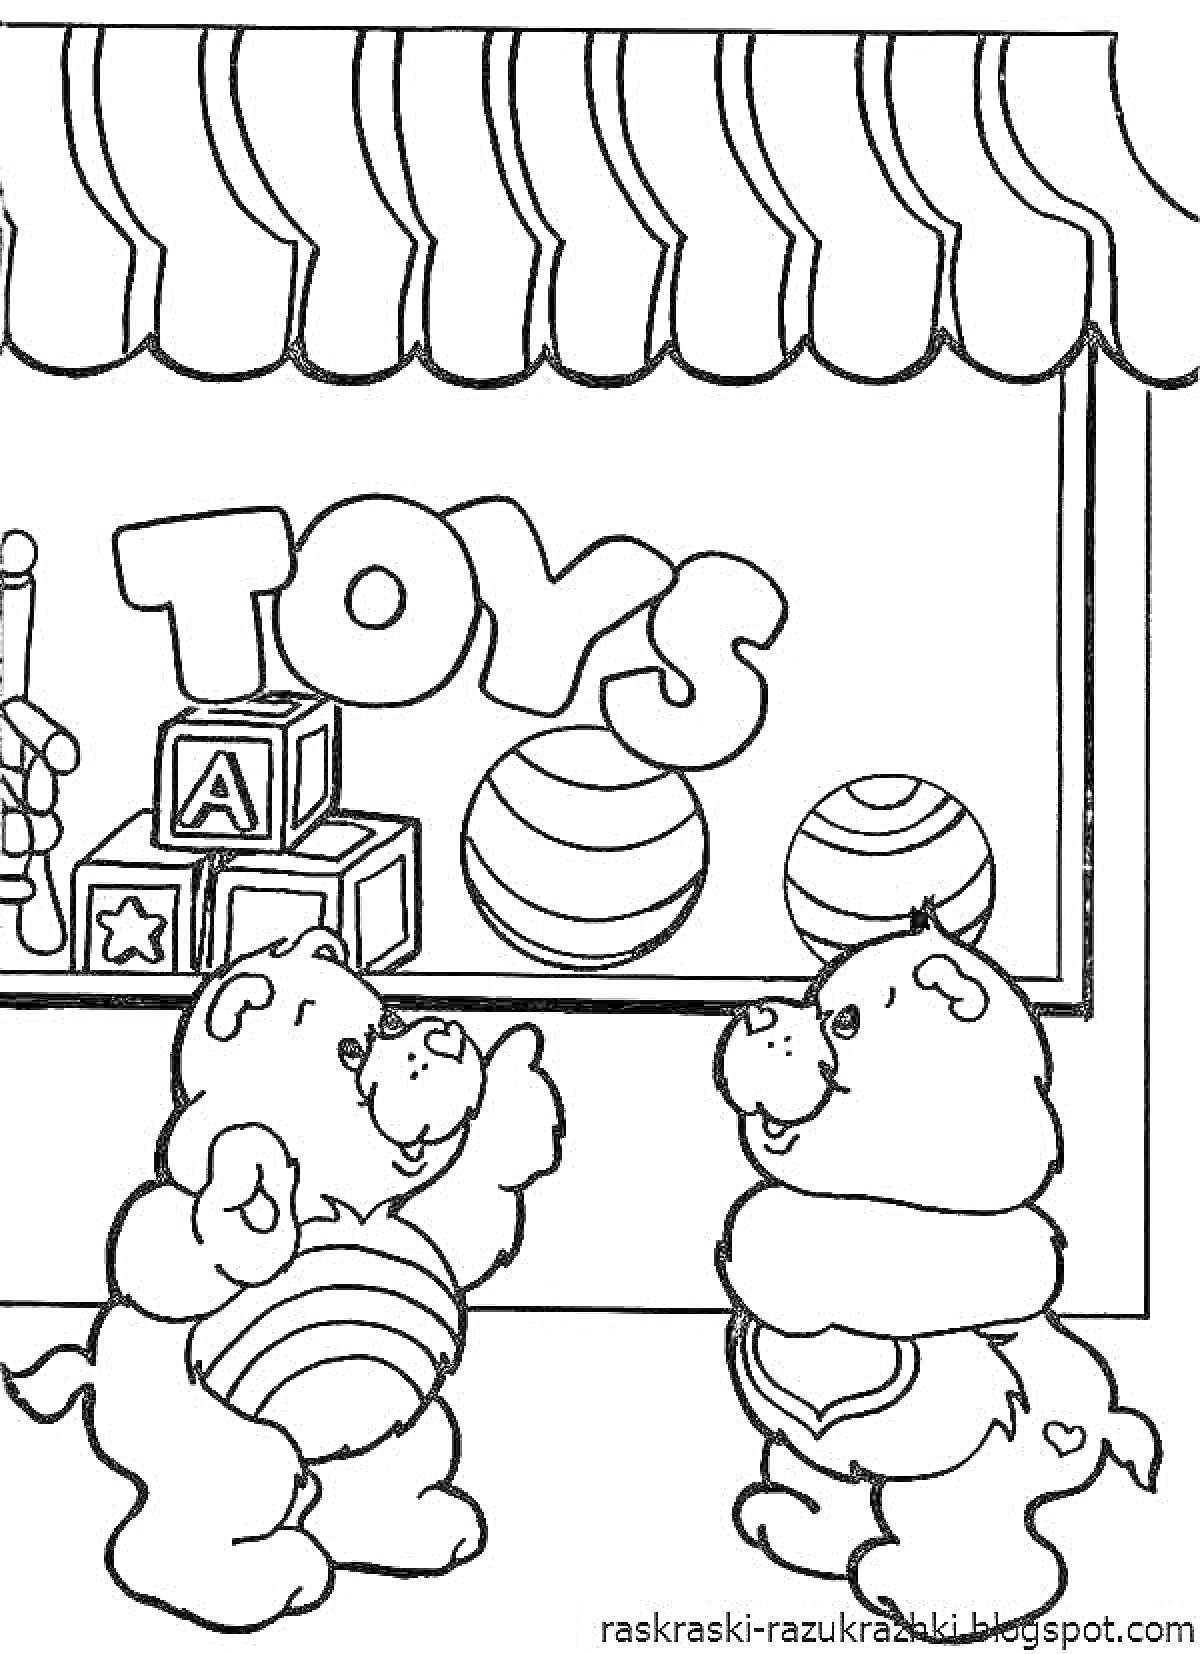 На раскраске изображено: Витрина, Магазин, Игрушки, Мячи, Кубики, Вывеска